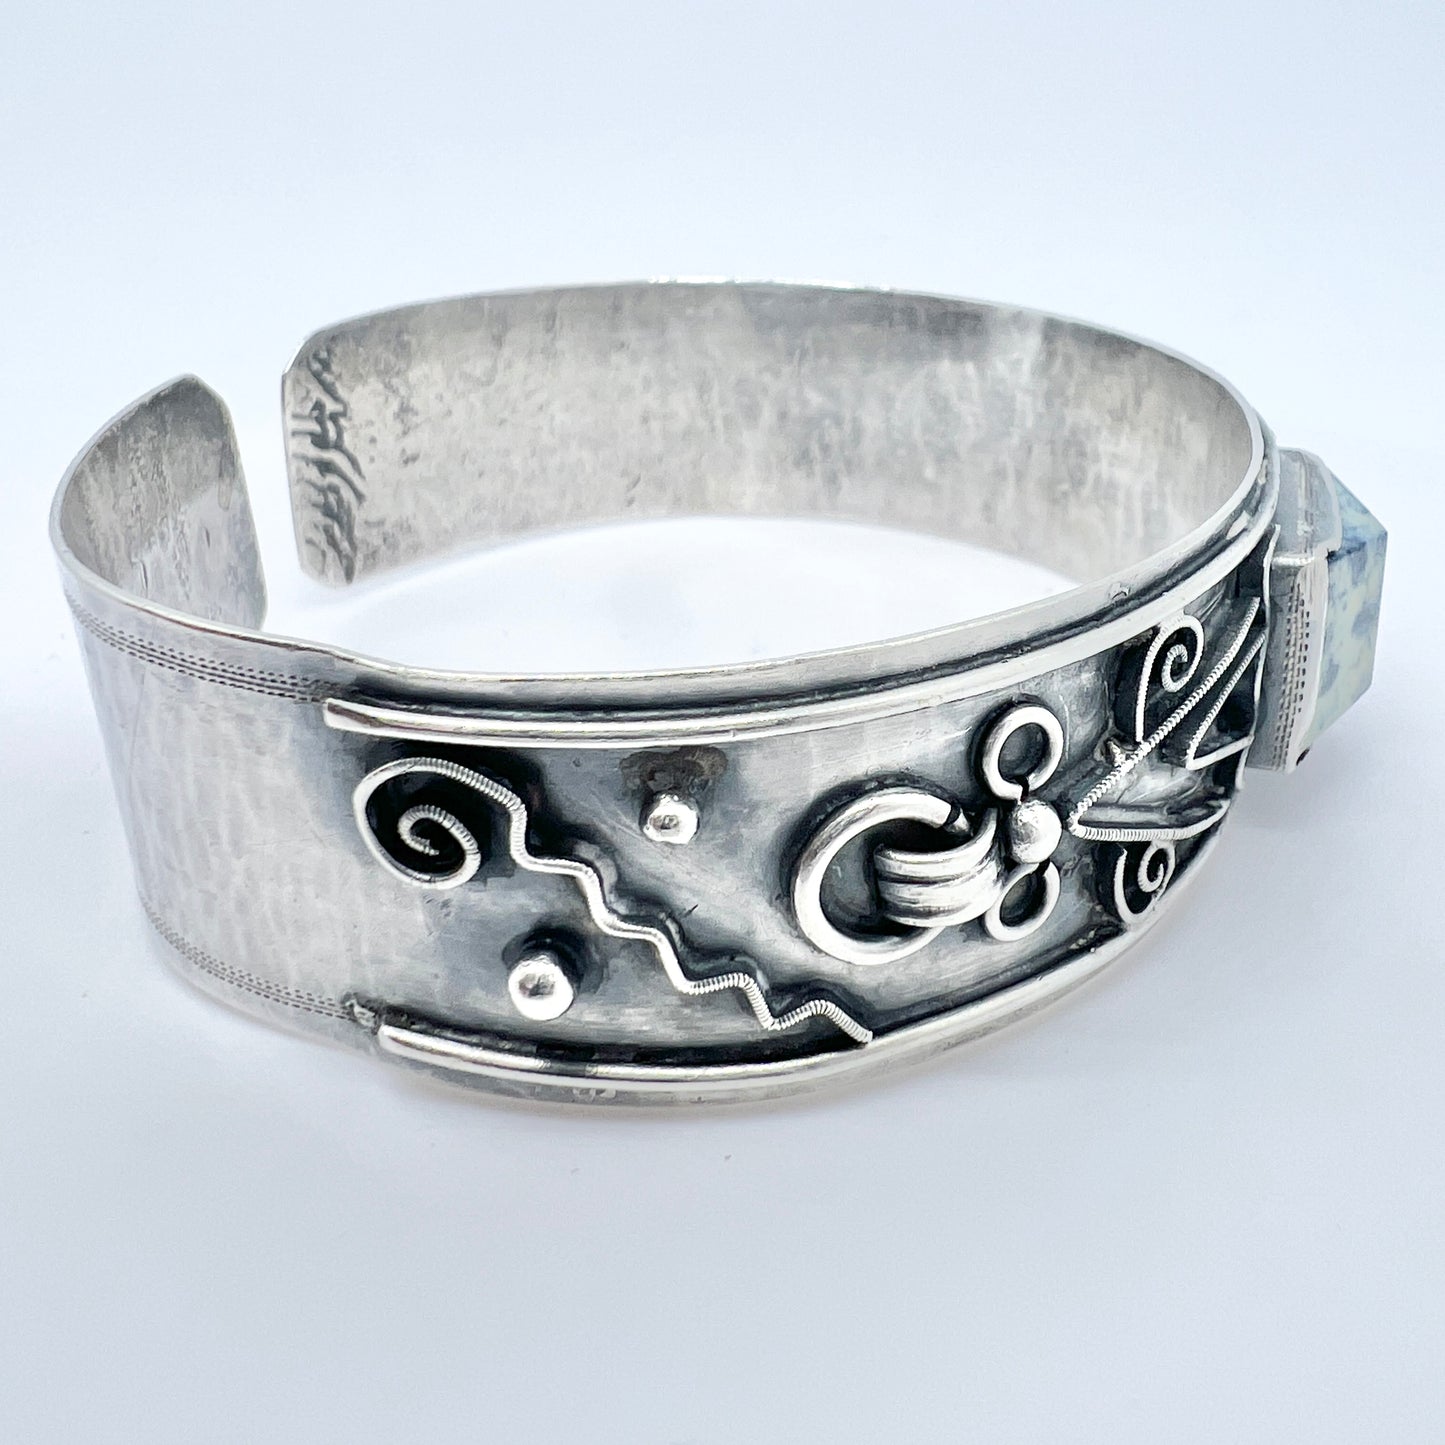 Karin Boström, Sweden 1938. Late Art Deco Sterling Silver Sodalite Cuff Bracelet. Signed.